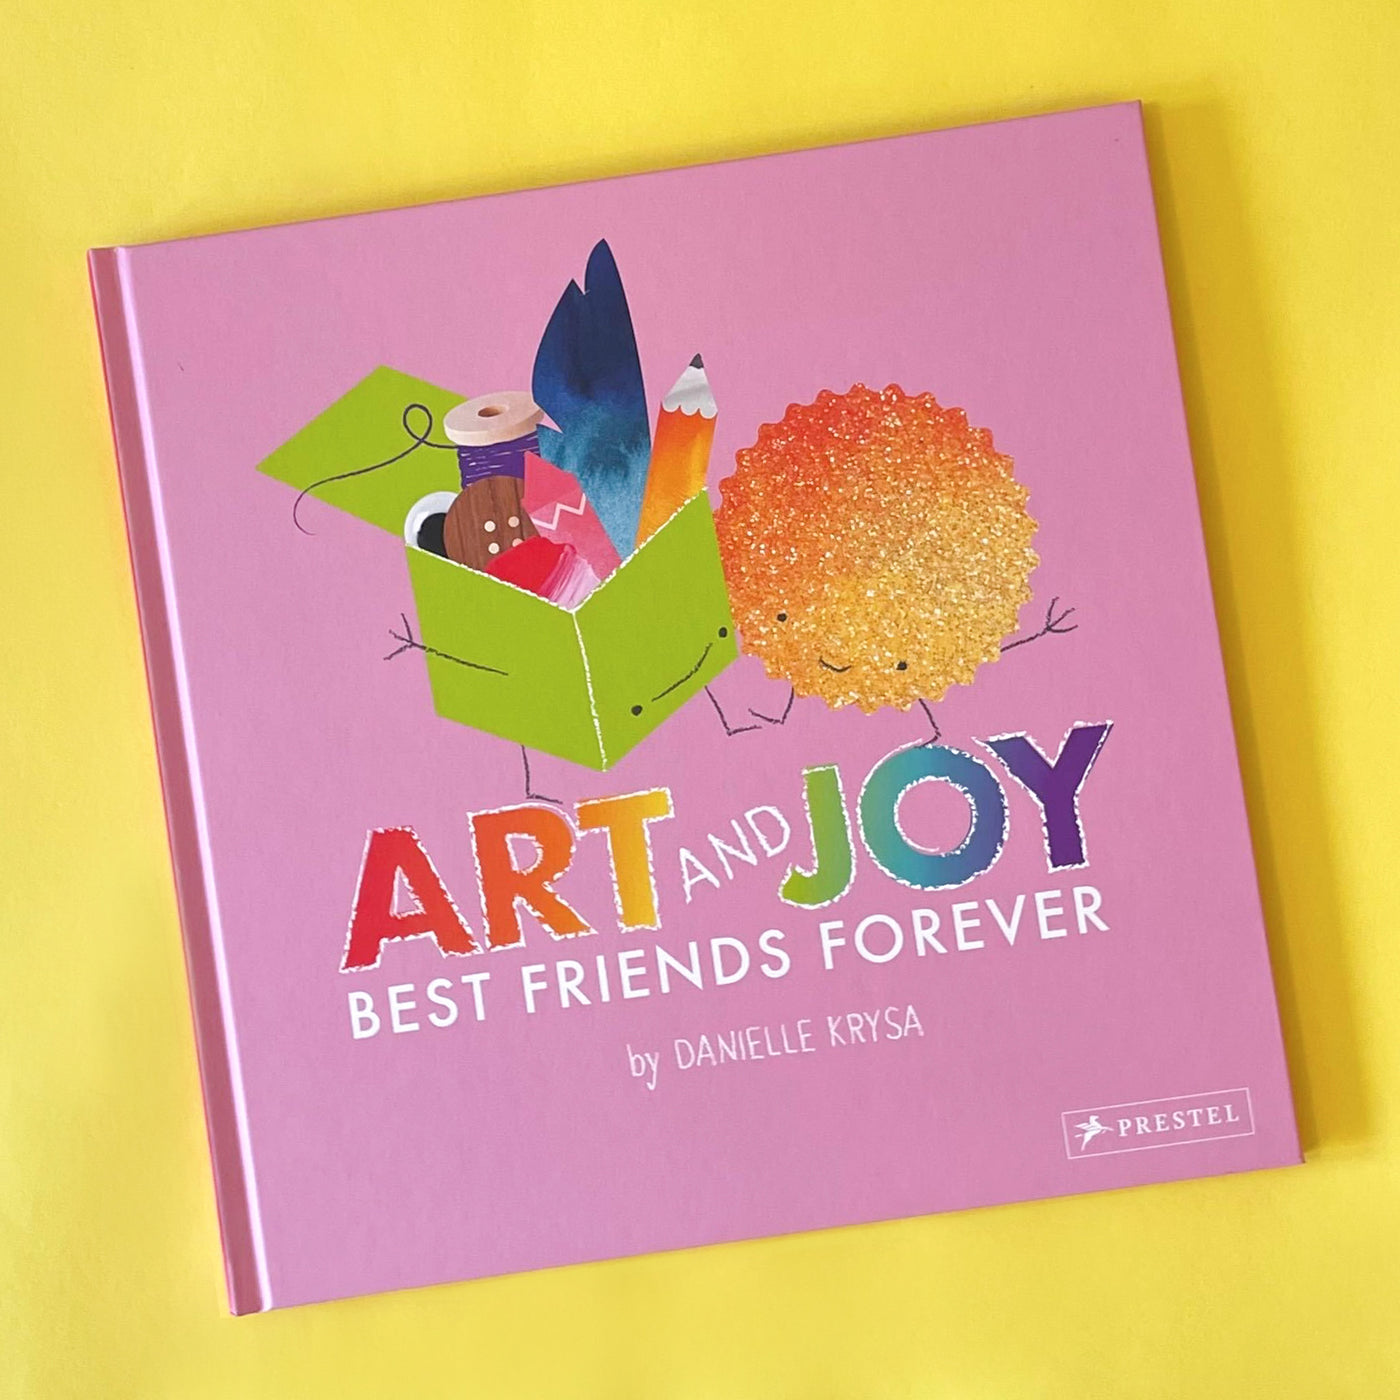 Art and Joy: Best Friends Forever by Danielle Krysa